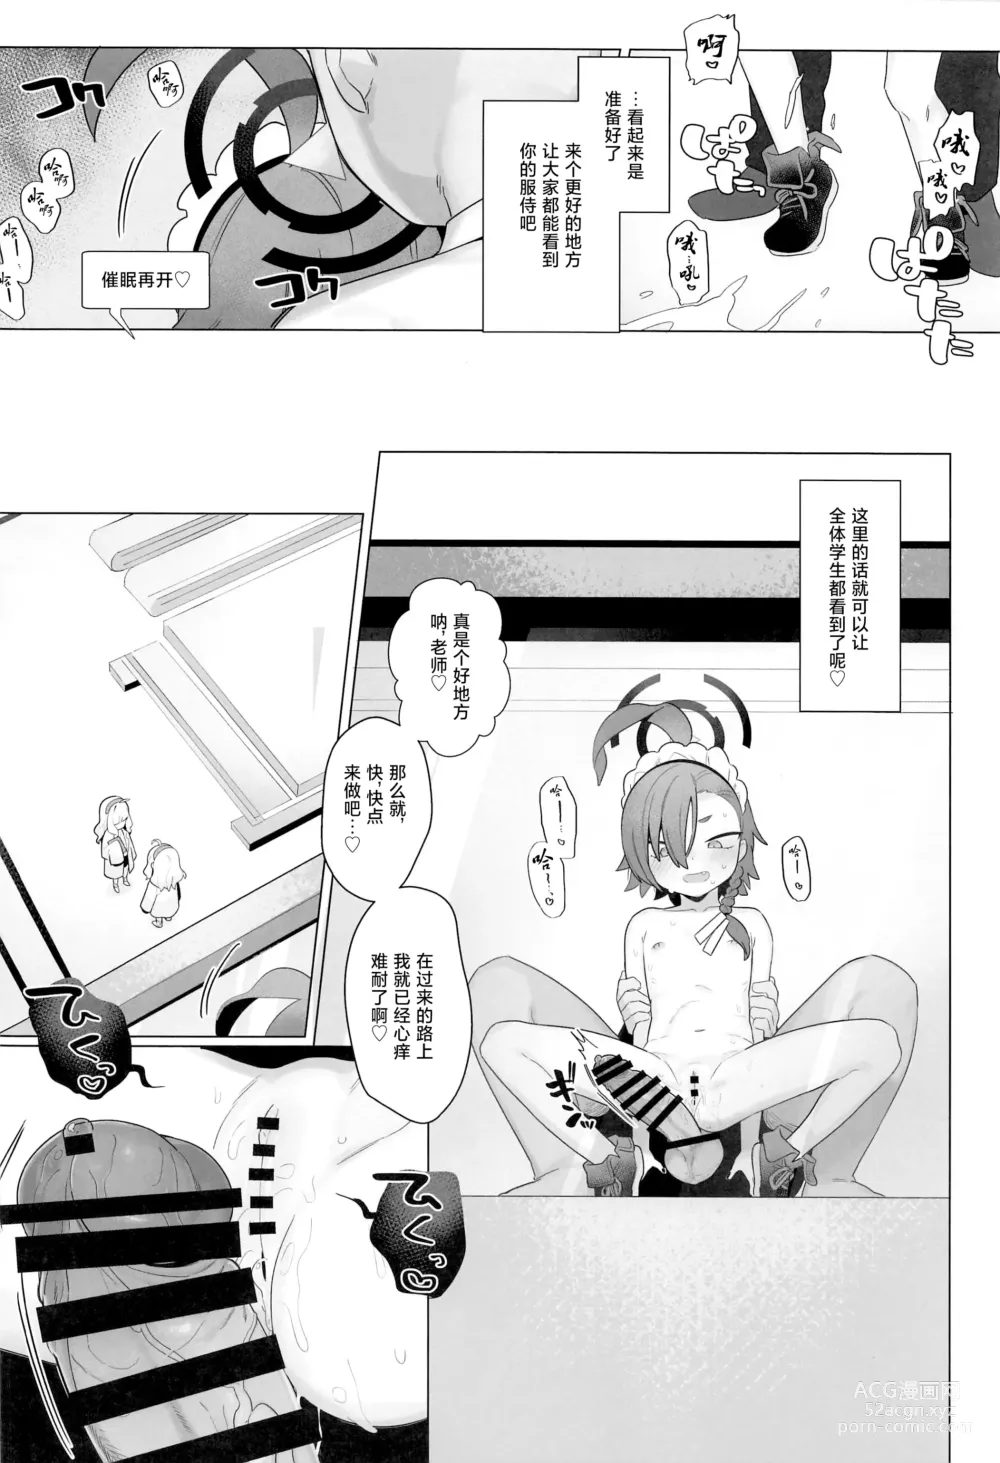 Page 18 of doujinshi 碧蓝档案催眠部4